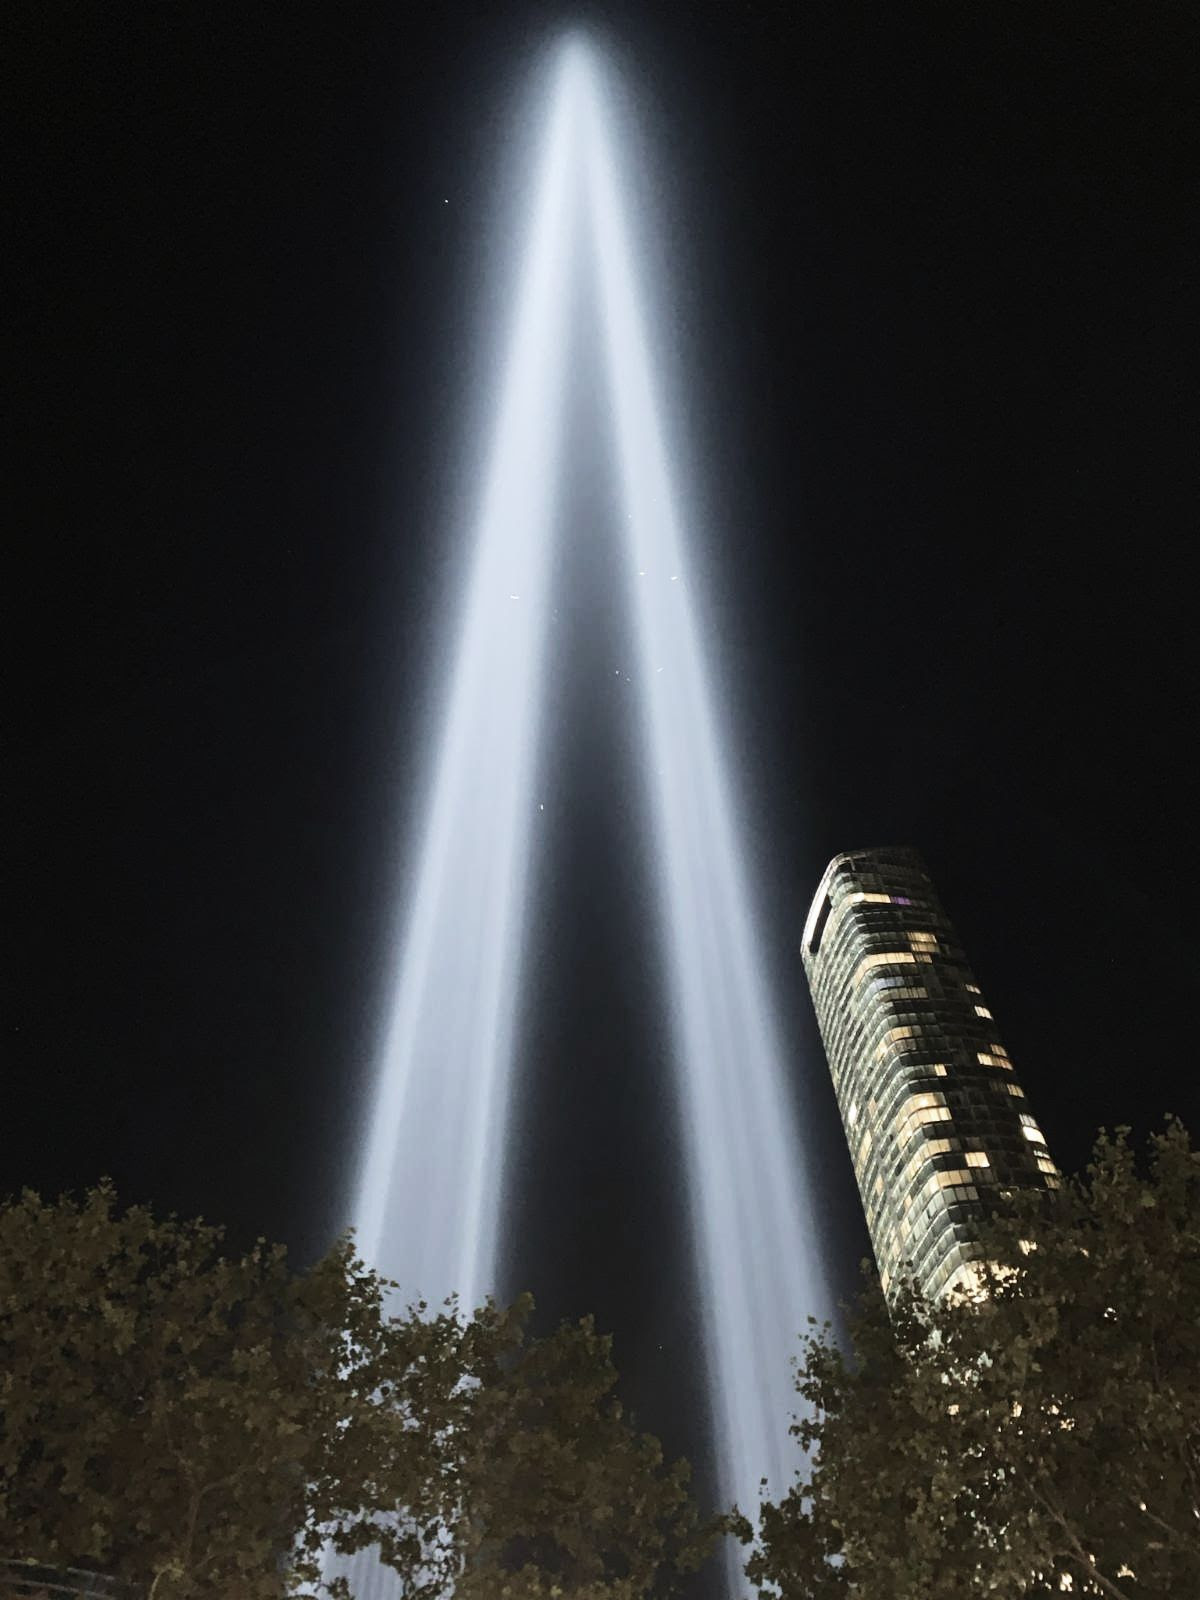 AHEPA Family Remembers 9/11